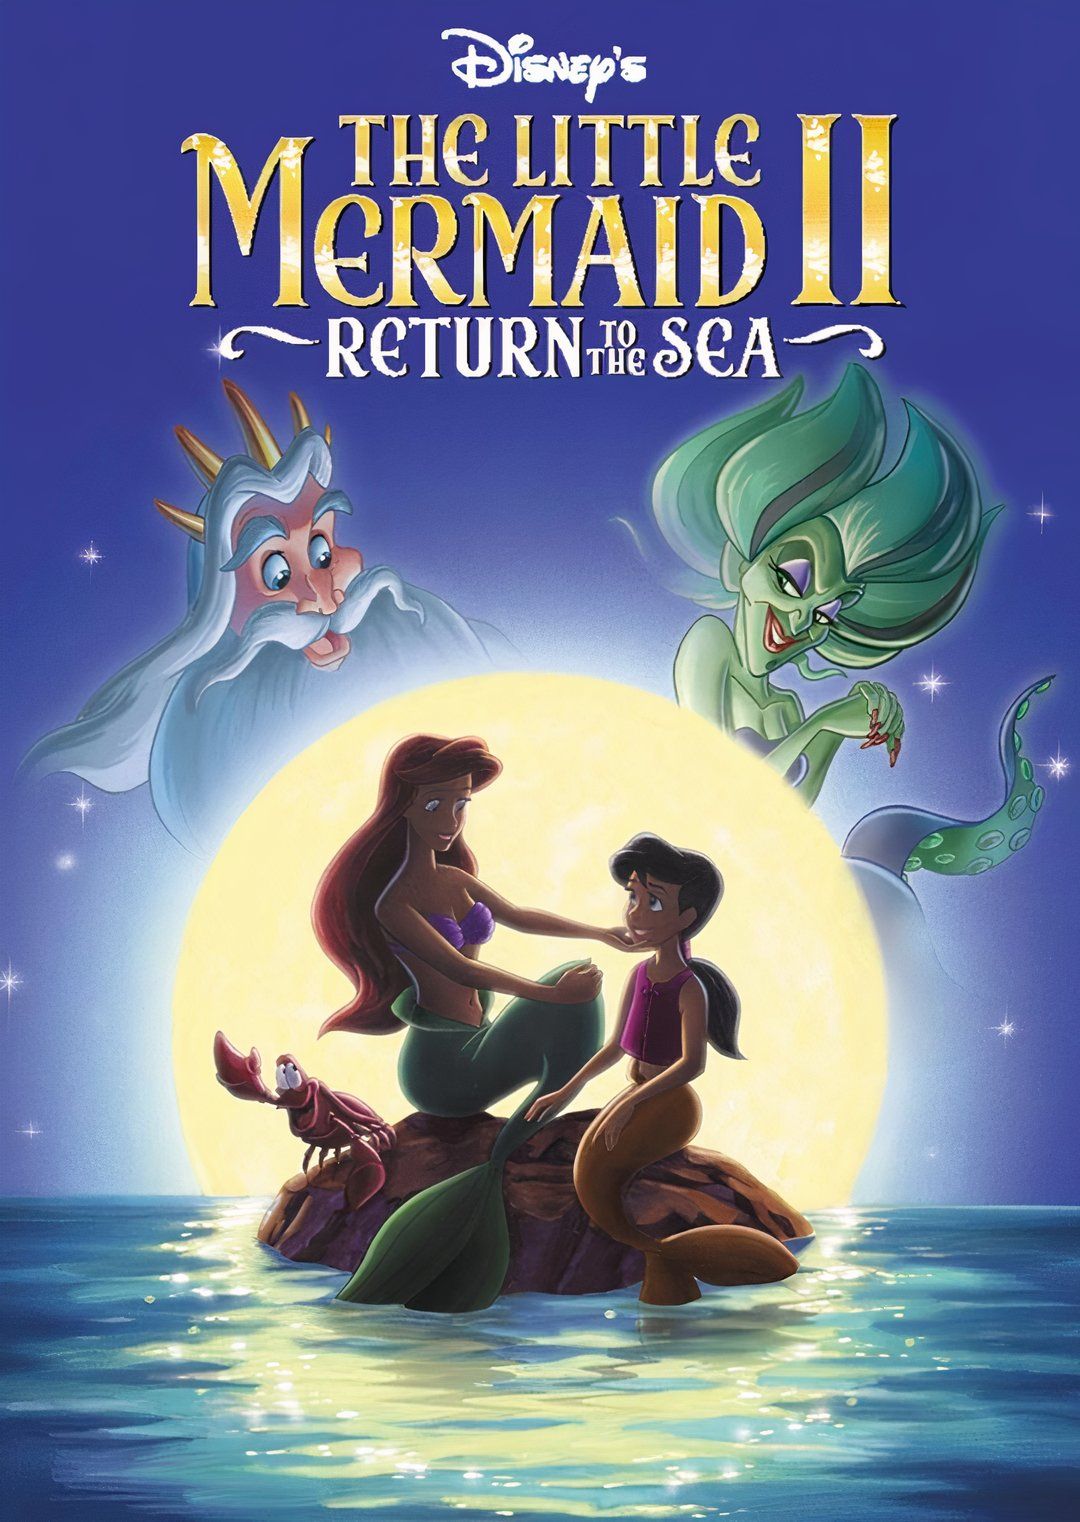 The Little Mermaid 2 - Return to the Sea